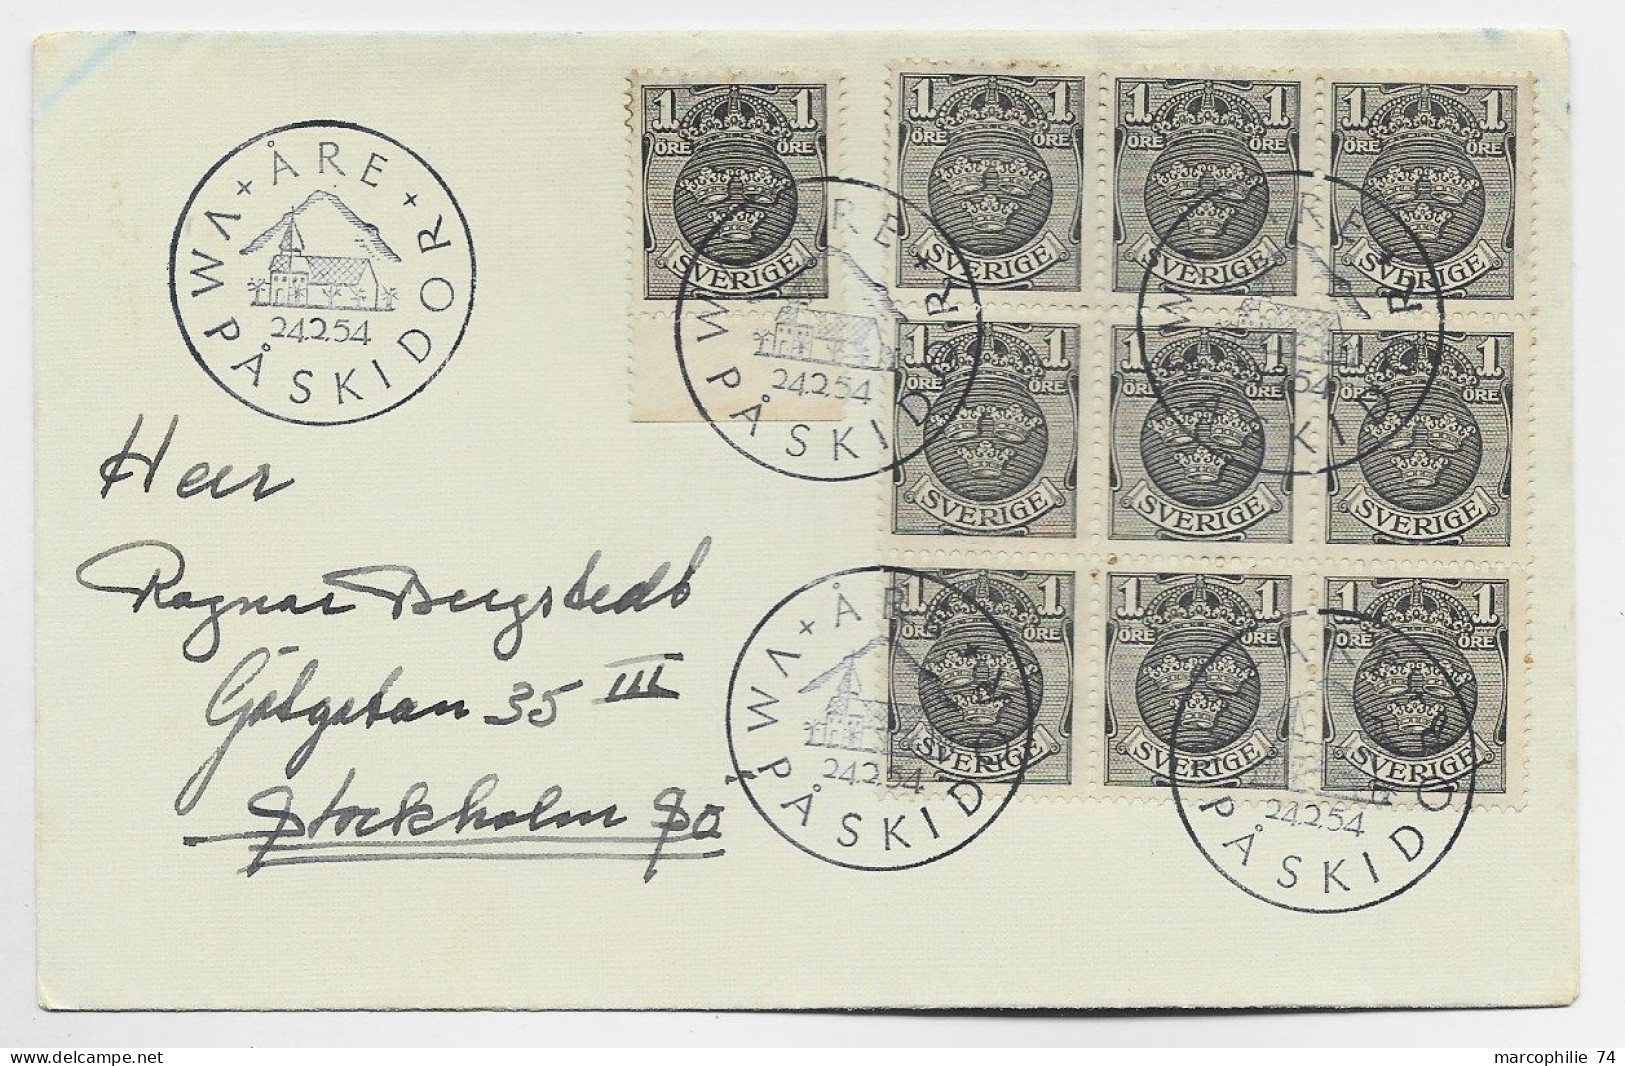 SVERIGE 1 ORE BLOC DE 9+1 LETTRE COVER WA ARE 24.2.1954 PASKIDOR TO STOCKHOLM - Storia Postale